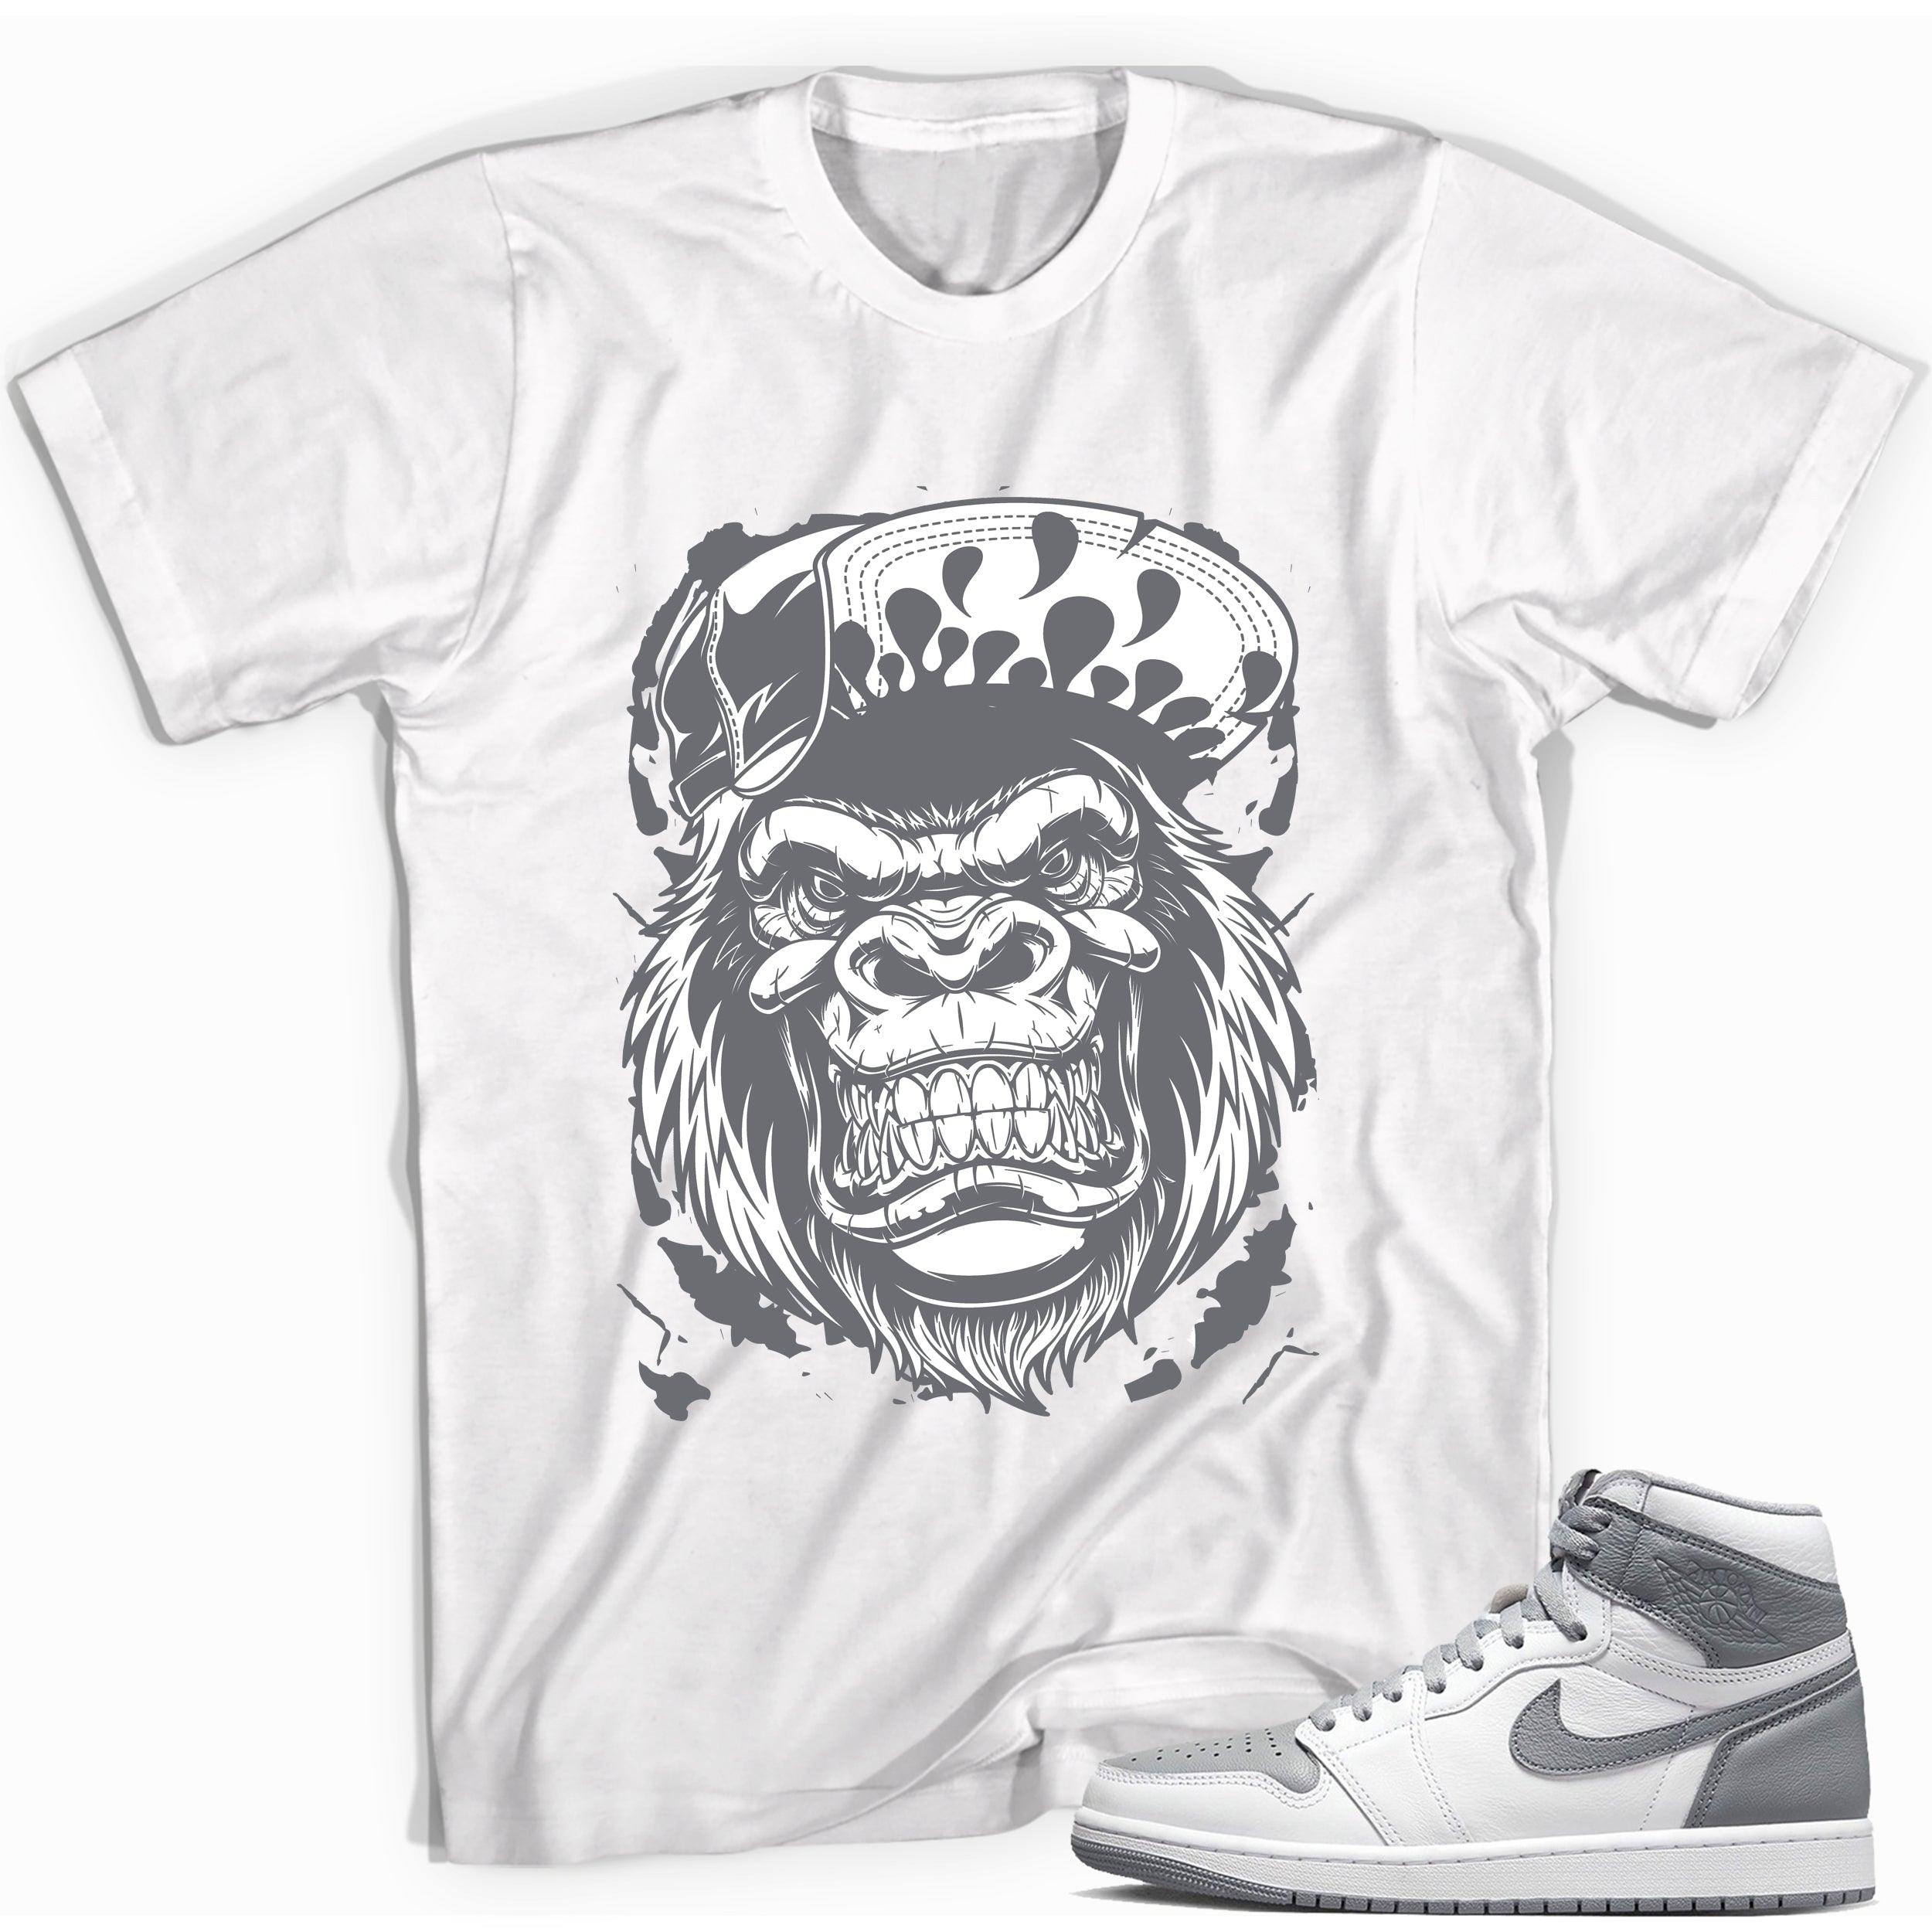 Gorilla Beast Shirt for Jordan 1s photo